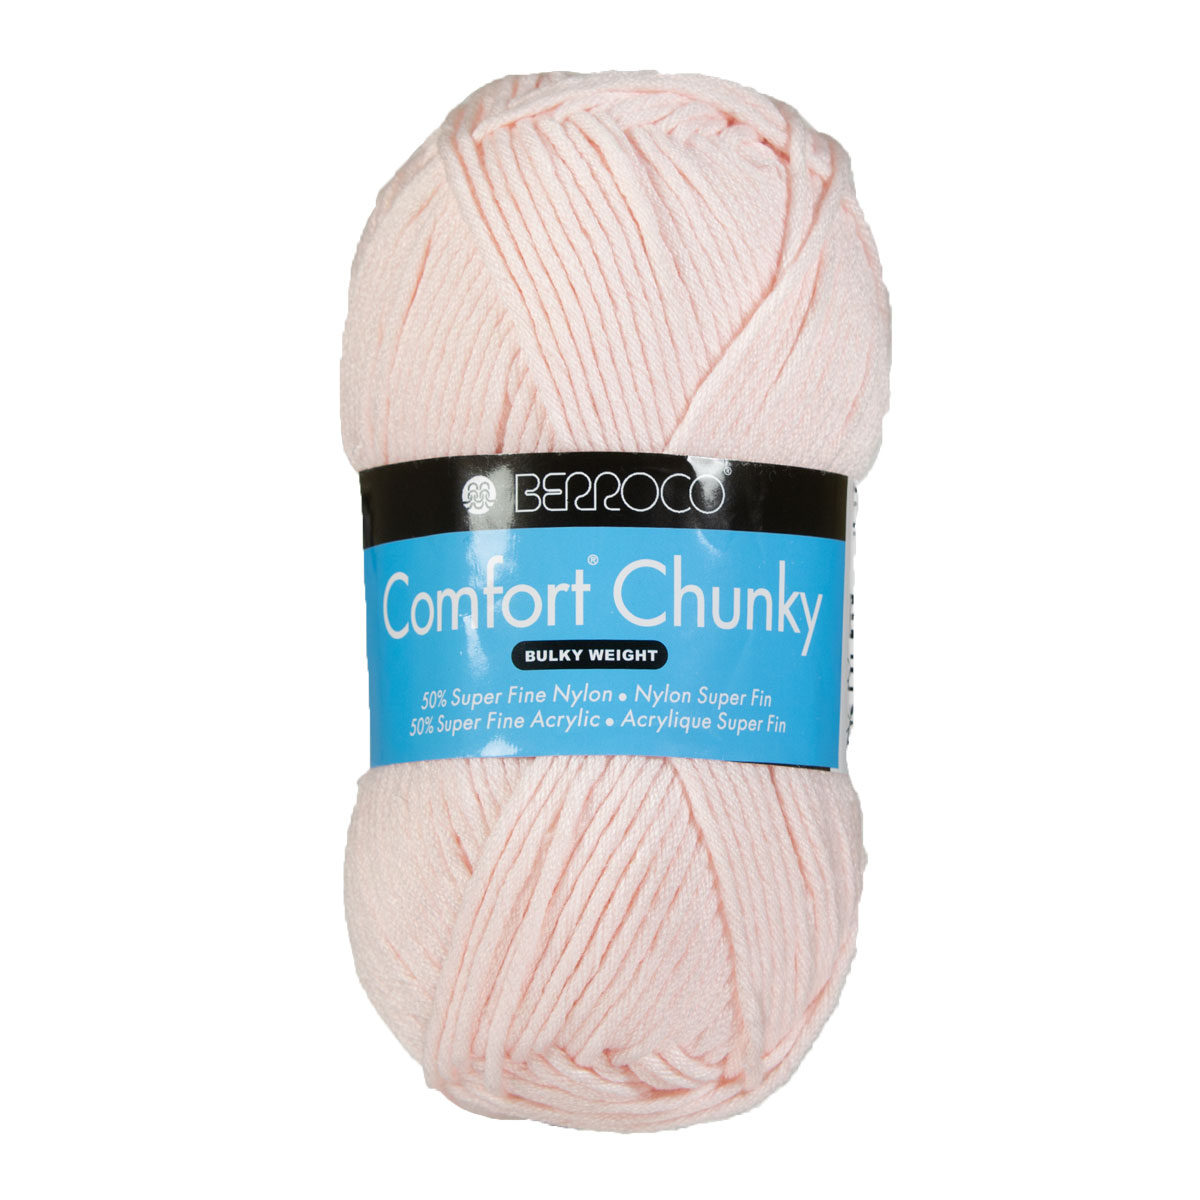 Berroco Comfort Chunky Yarn - 5705 Pretty Pink at Jimmy Beans Wool